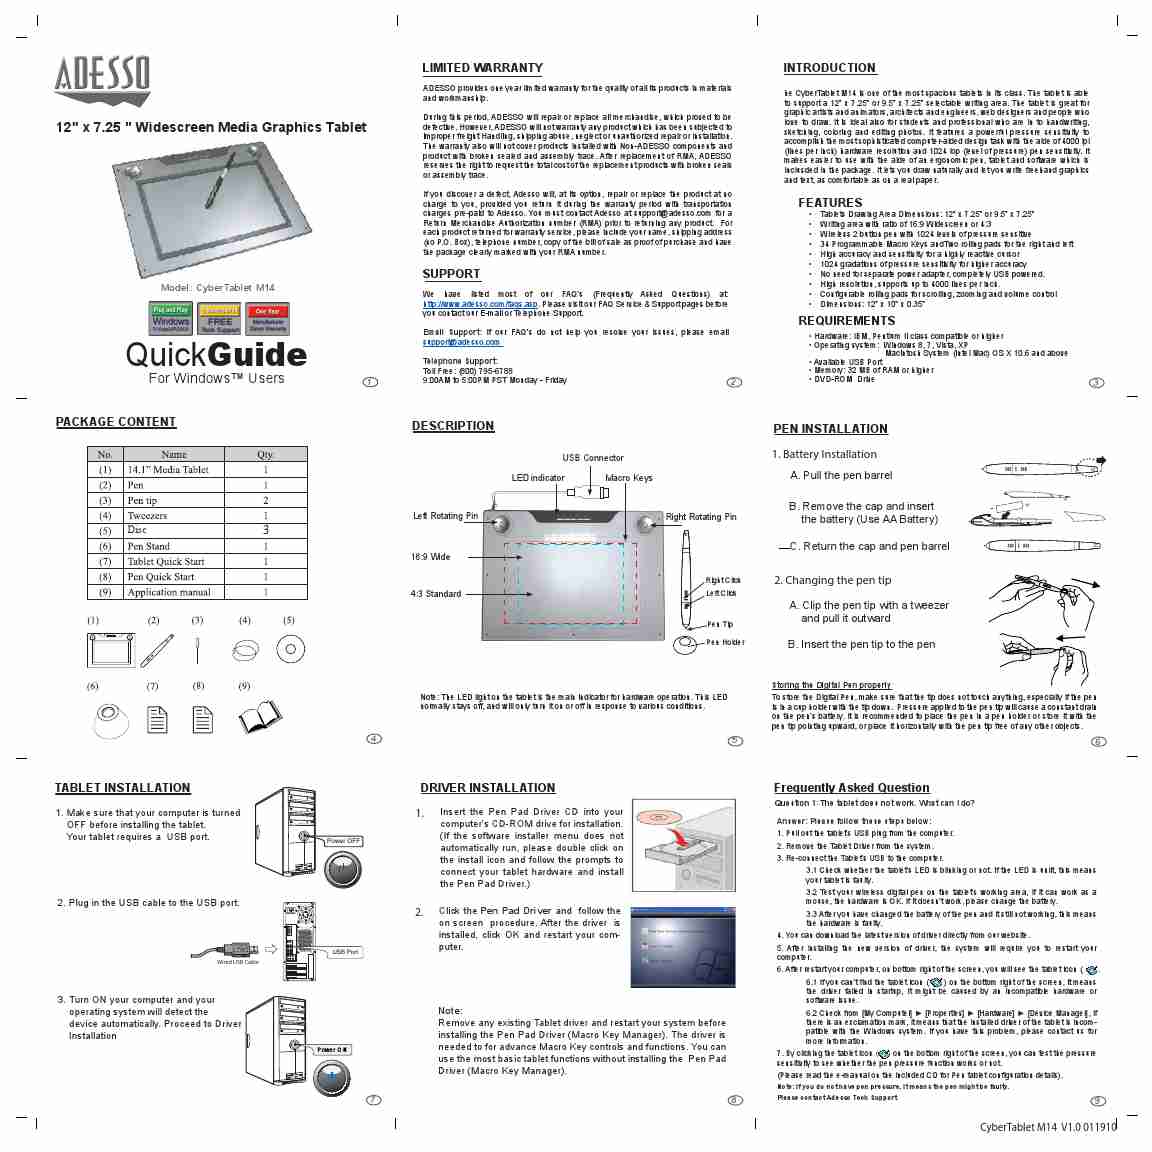 ADESSO CYBERTABLET M14-page_pdf